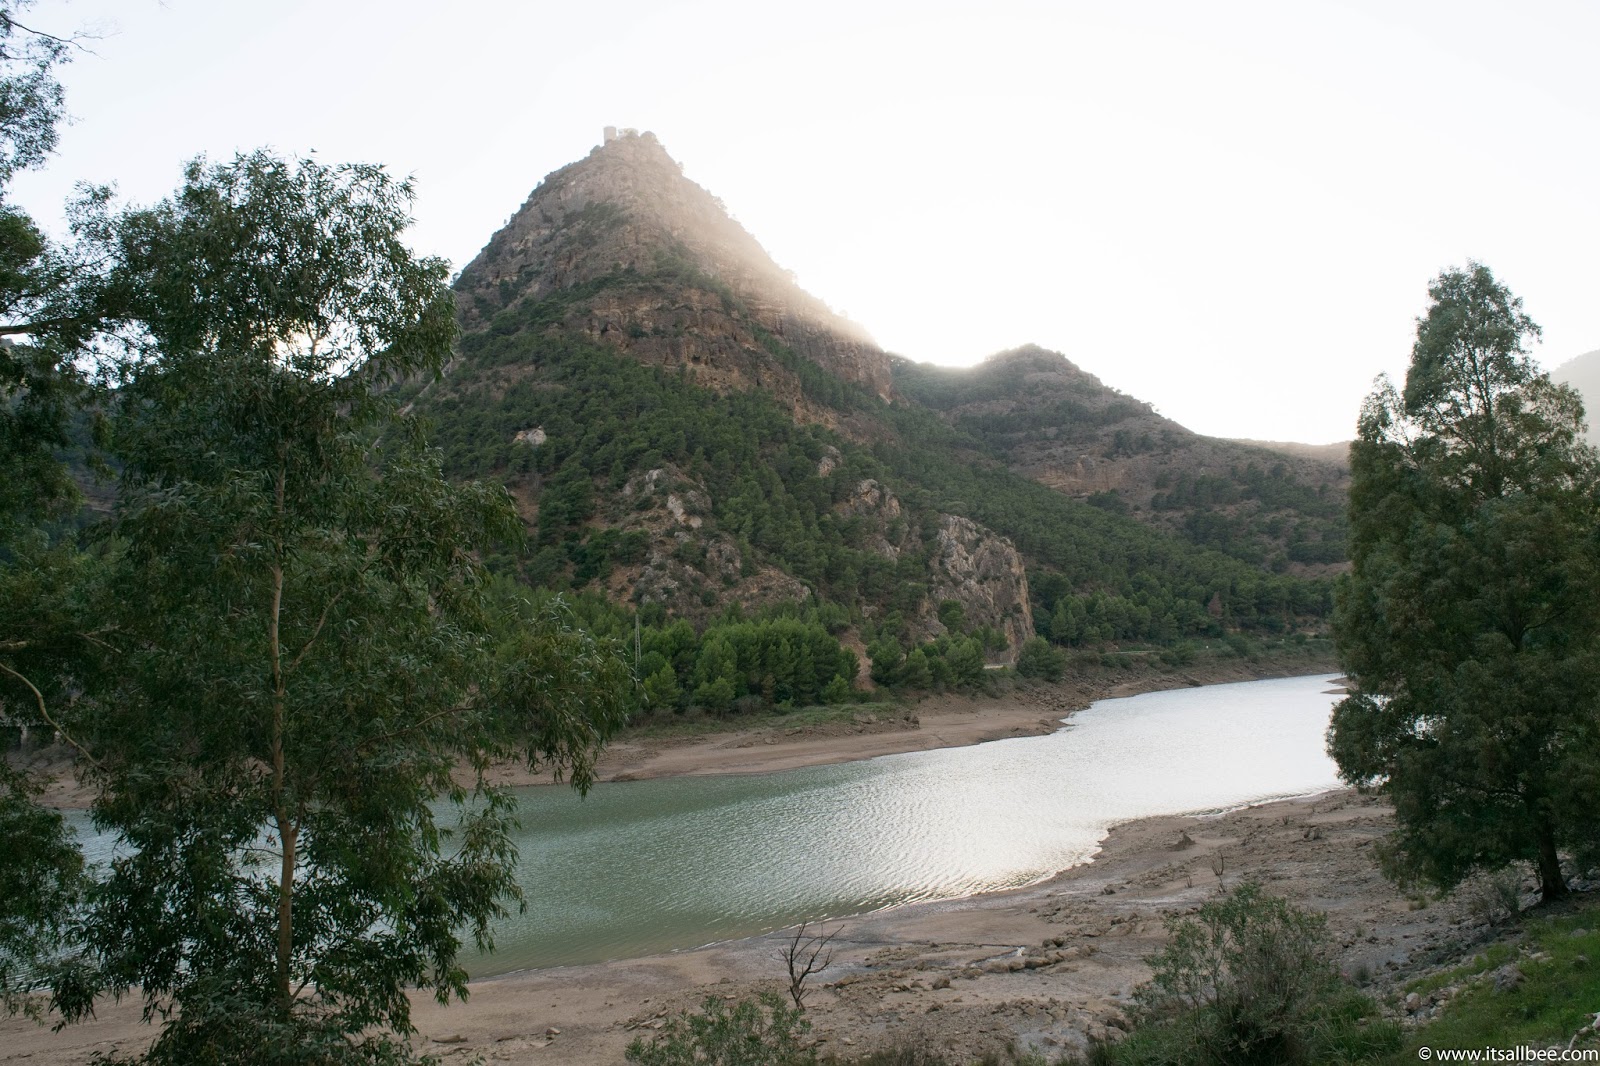 El Caminito Del Rey | Hiking Spain's Most Dangerous Hiking Trail